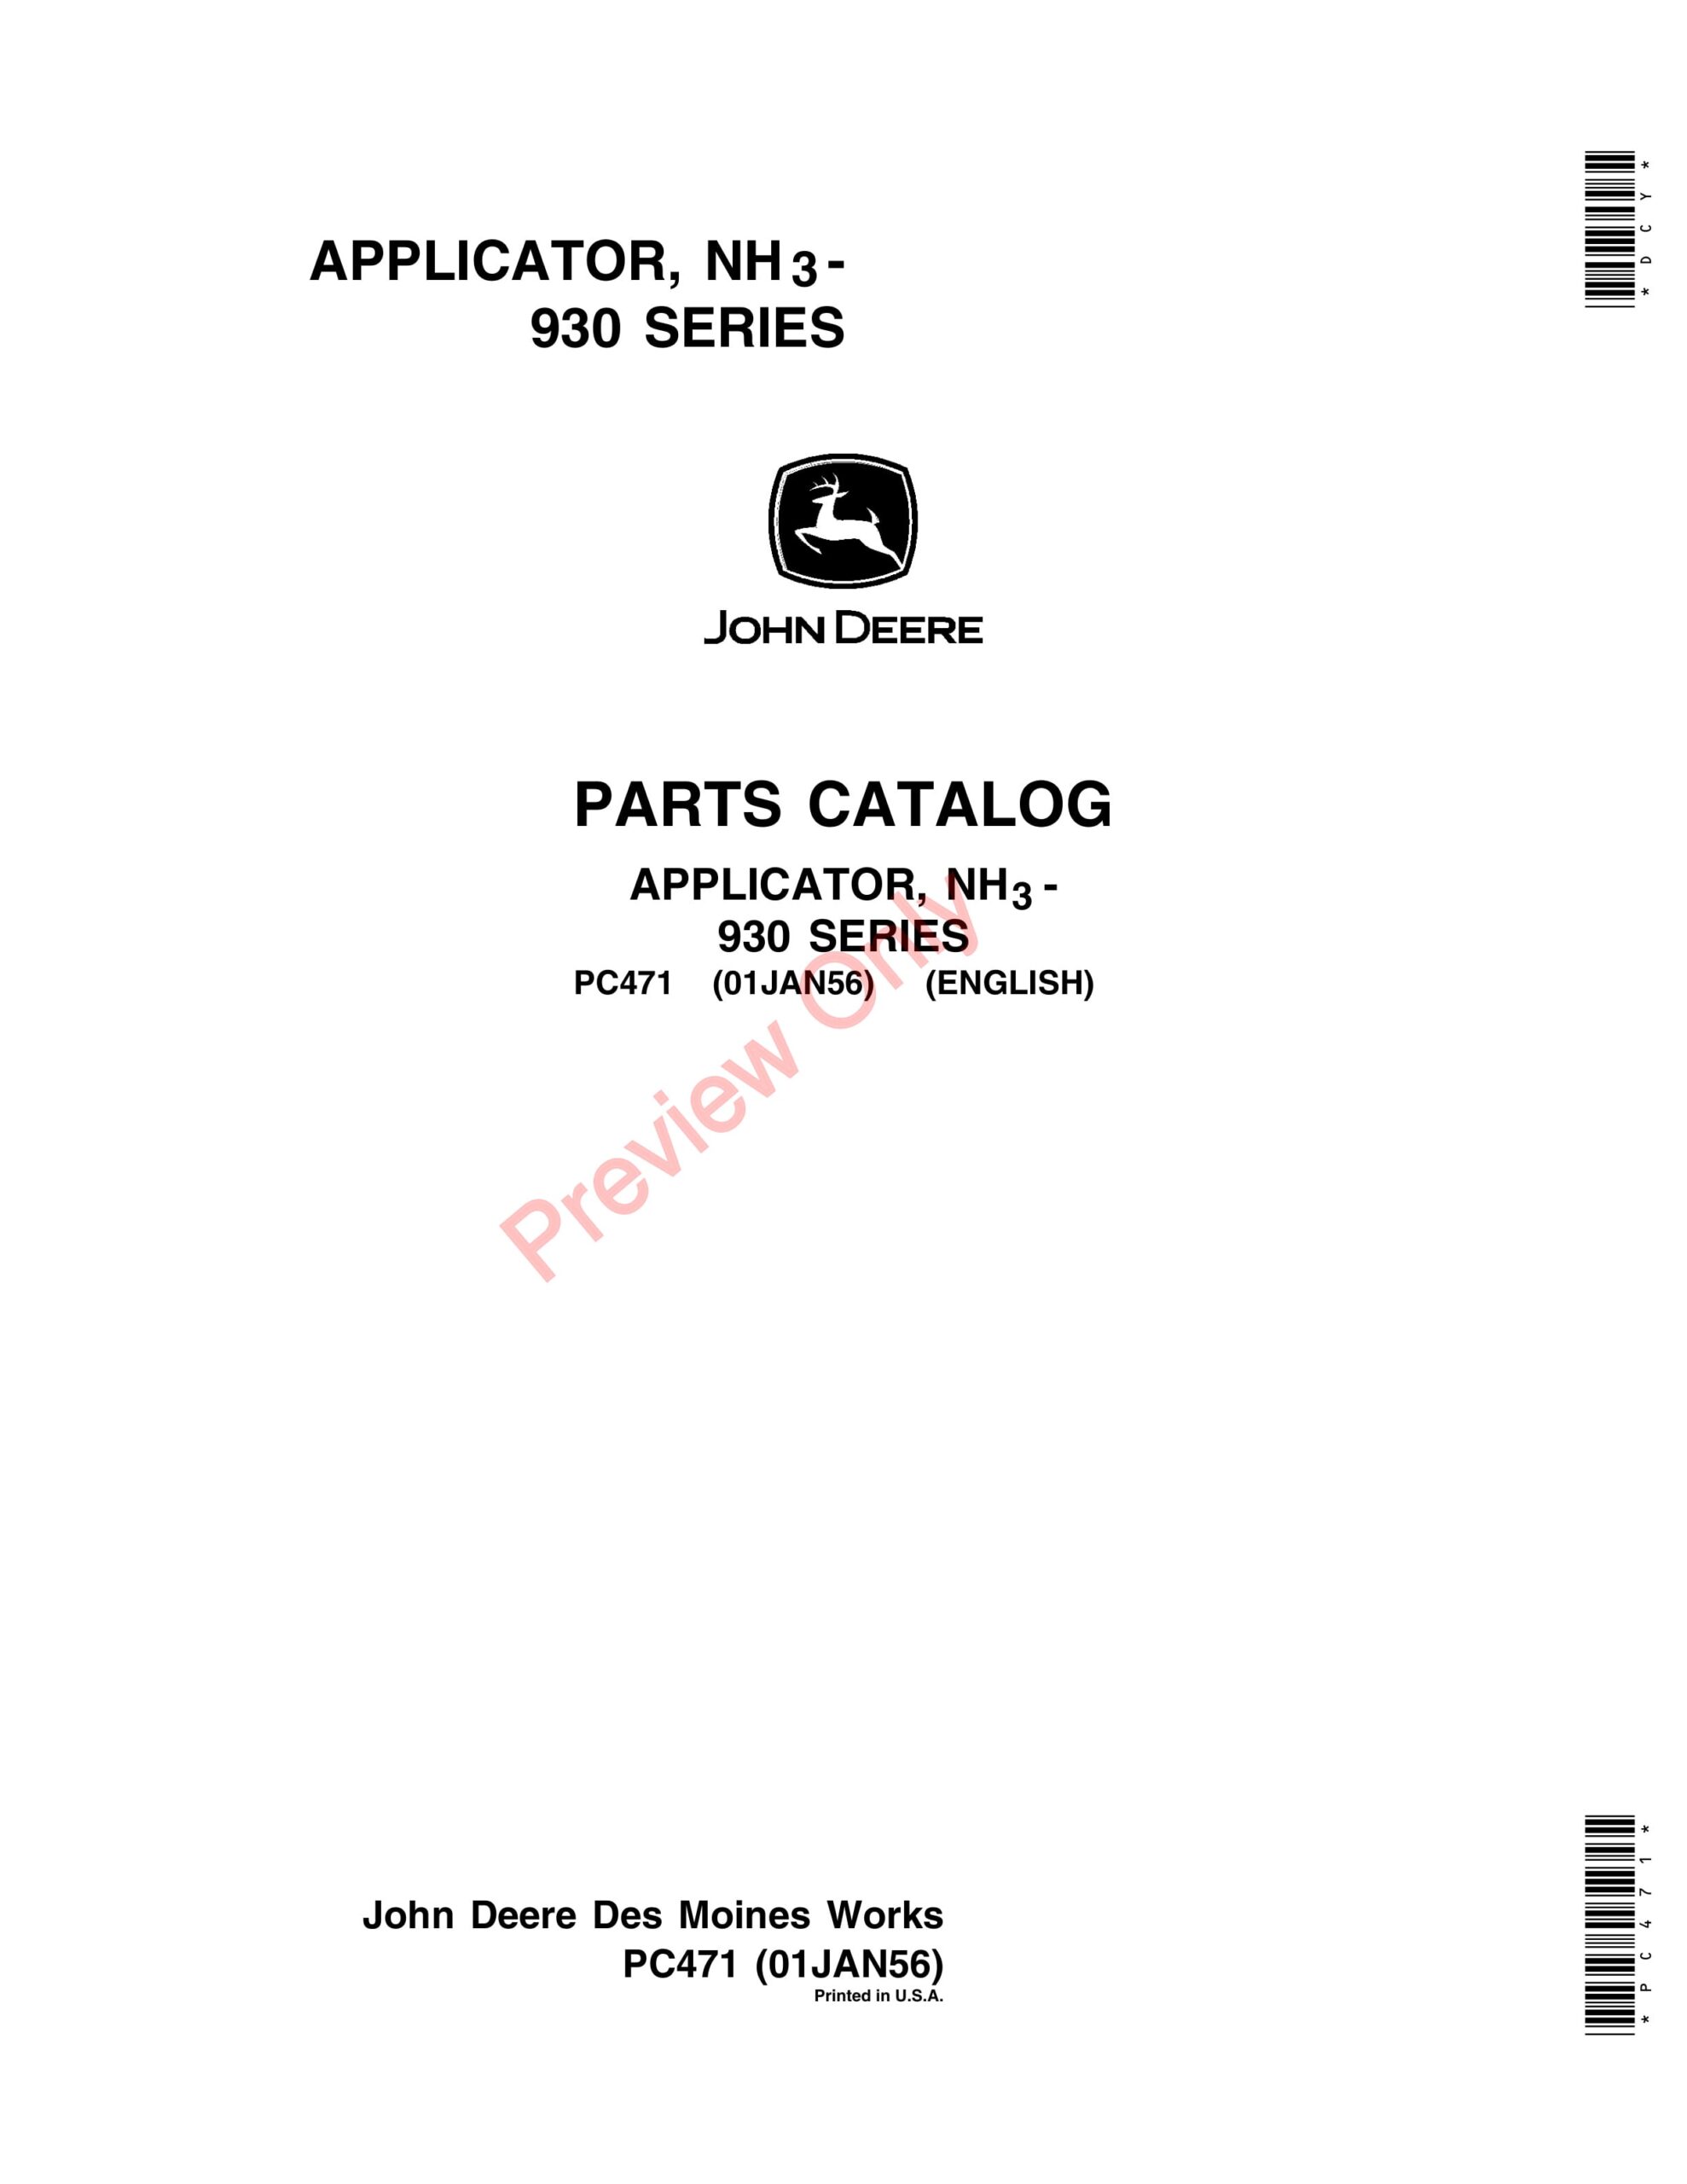 John Deere 930 Series NH3 Applicator Parts Catalog PC471 01JAN56-1